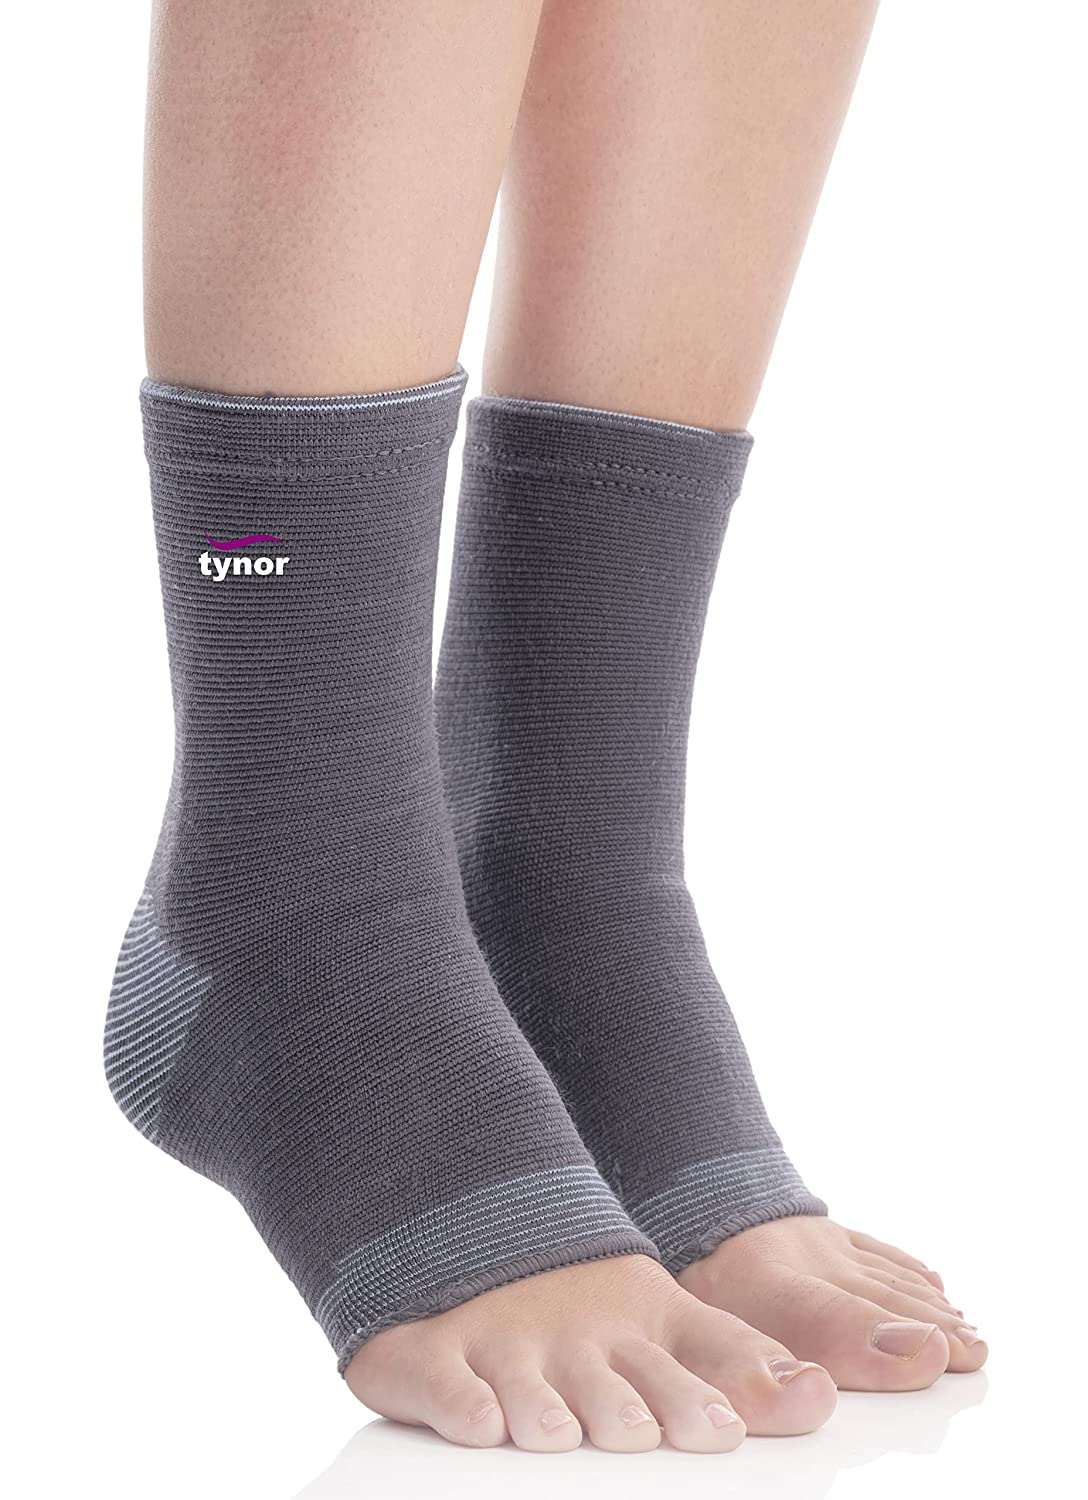 Tynor Anklet Comfeel (Pair)